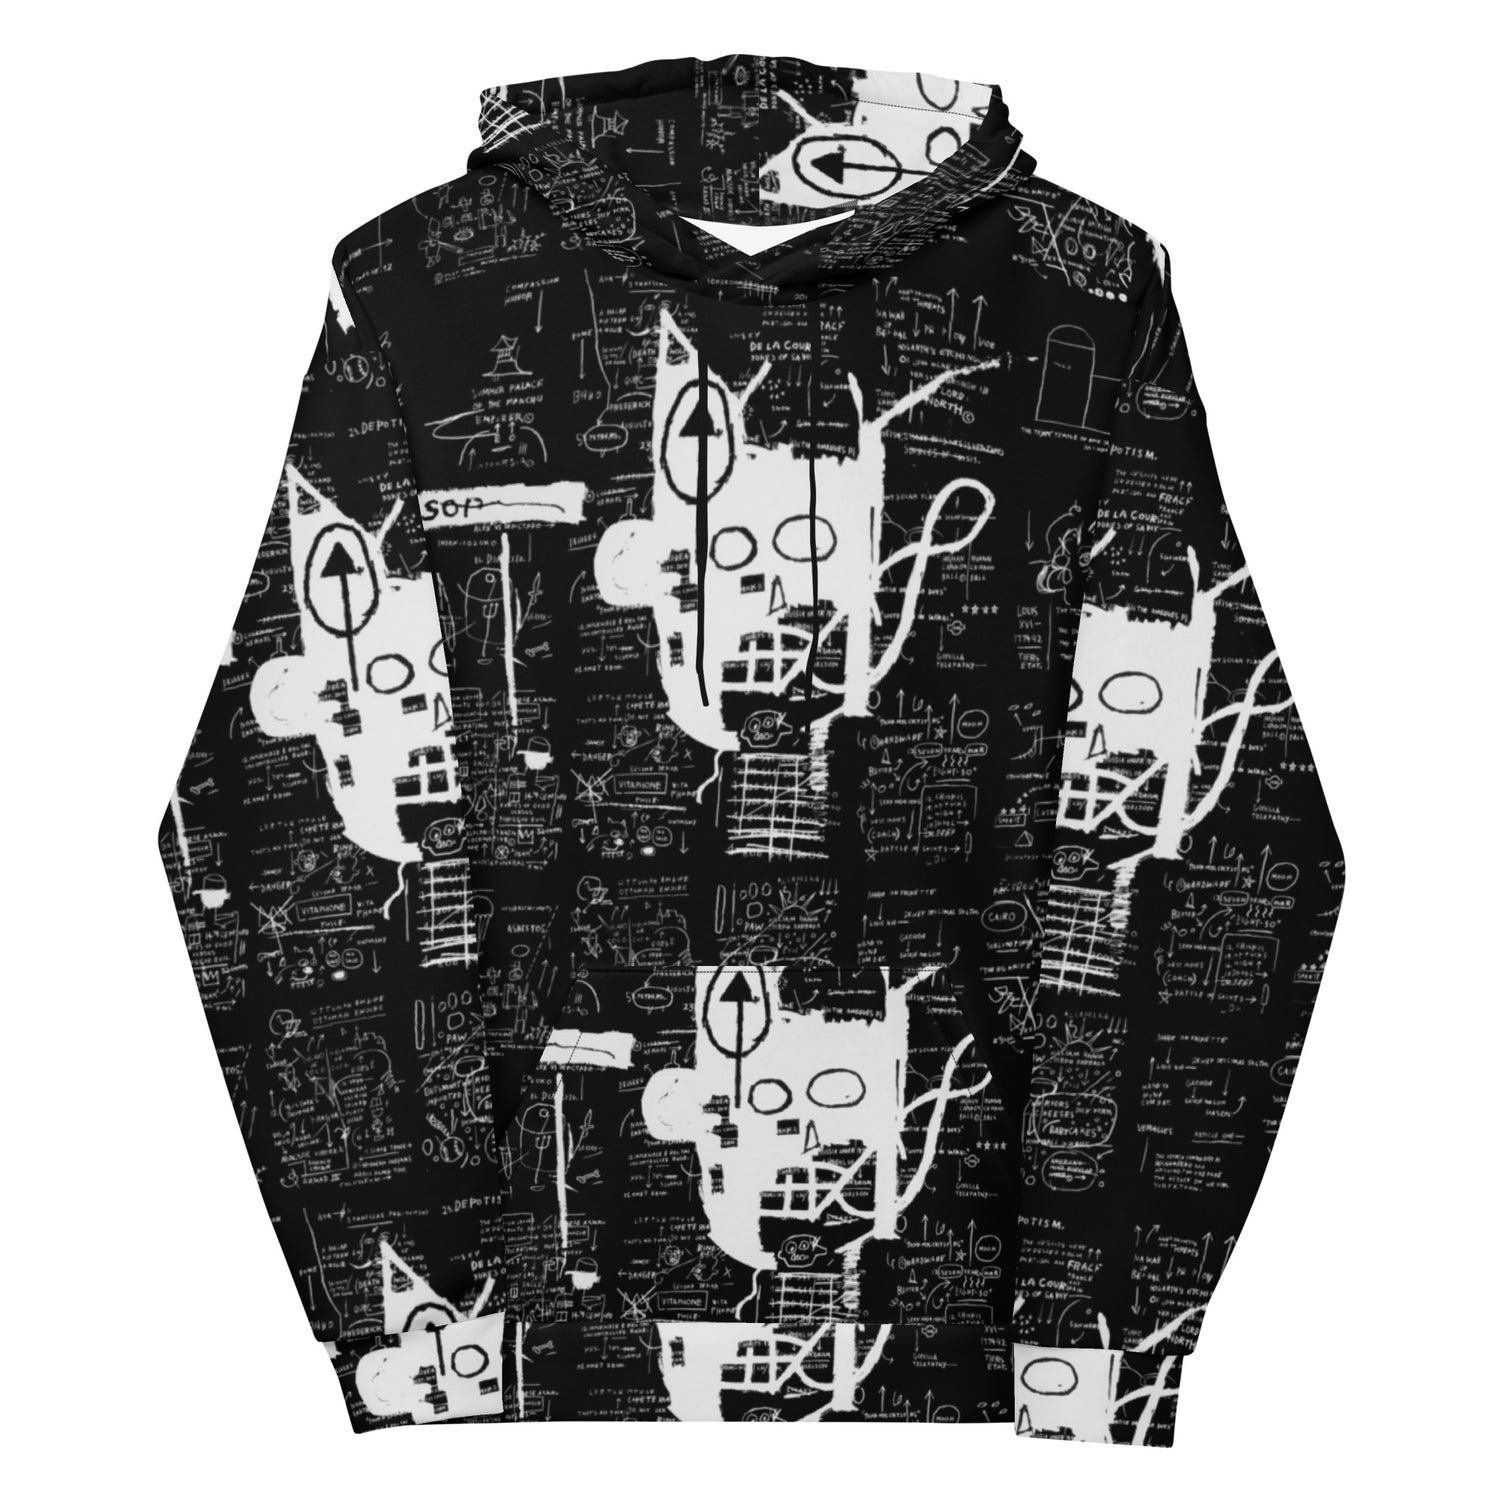 Jean-Michel Basquiat "Untitled" Artwork Printed Premium Streetwear Sweatshirt Hoodie Graffiti Harajuku